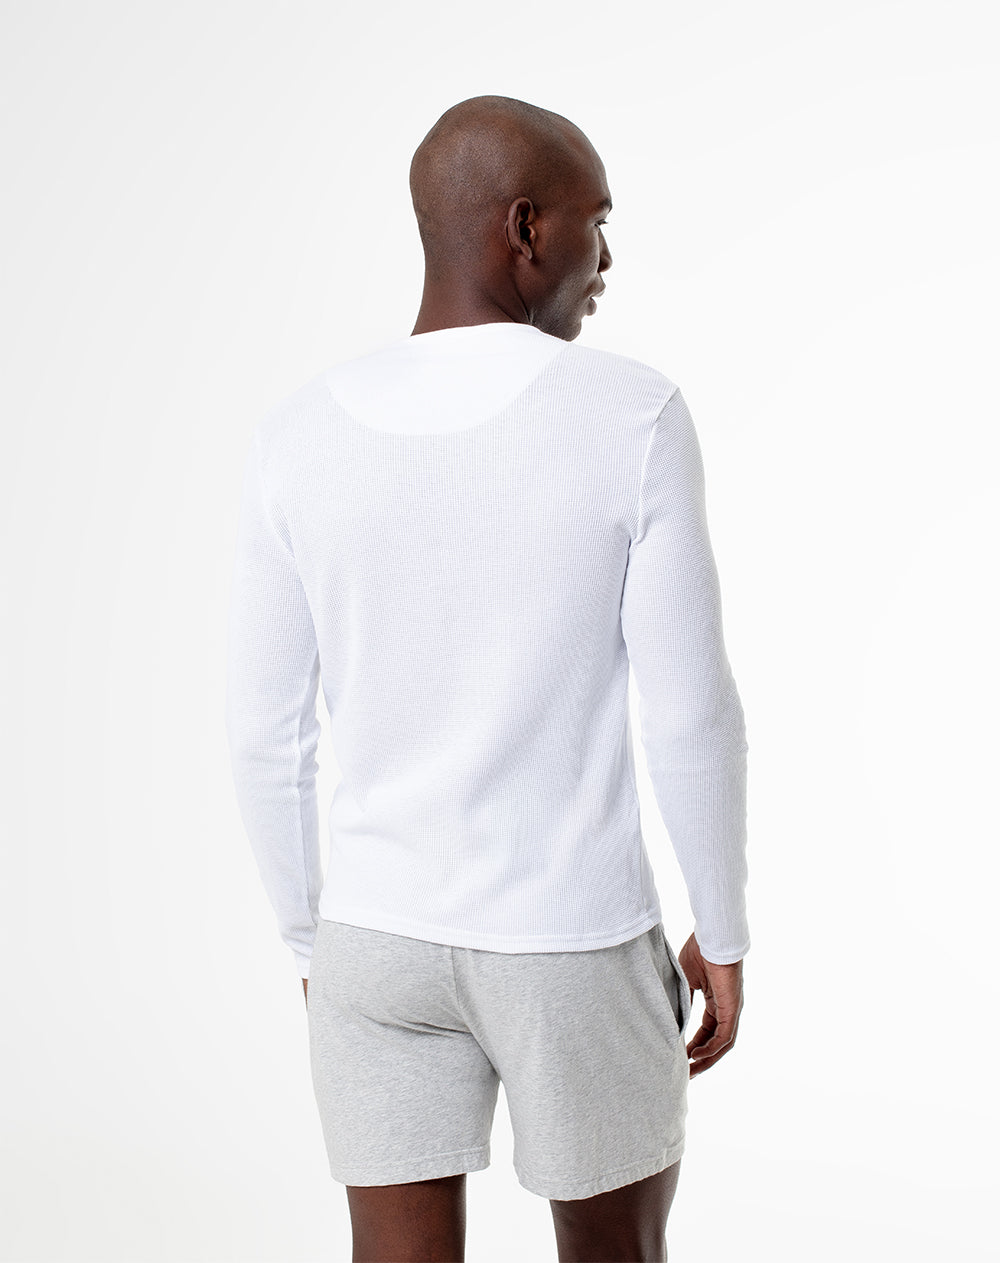 Camiseta slim fit manga larga blanca